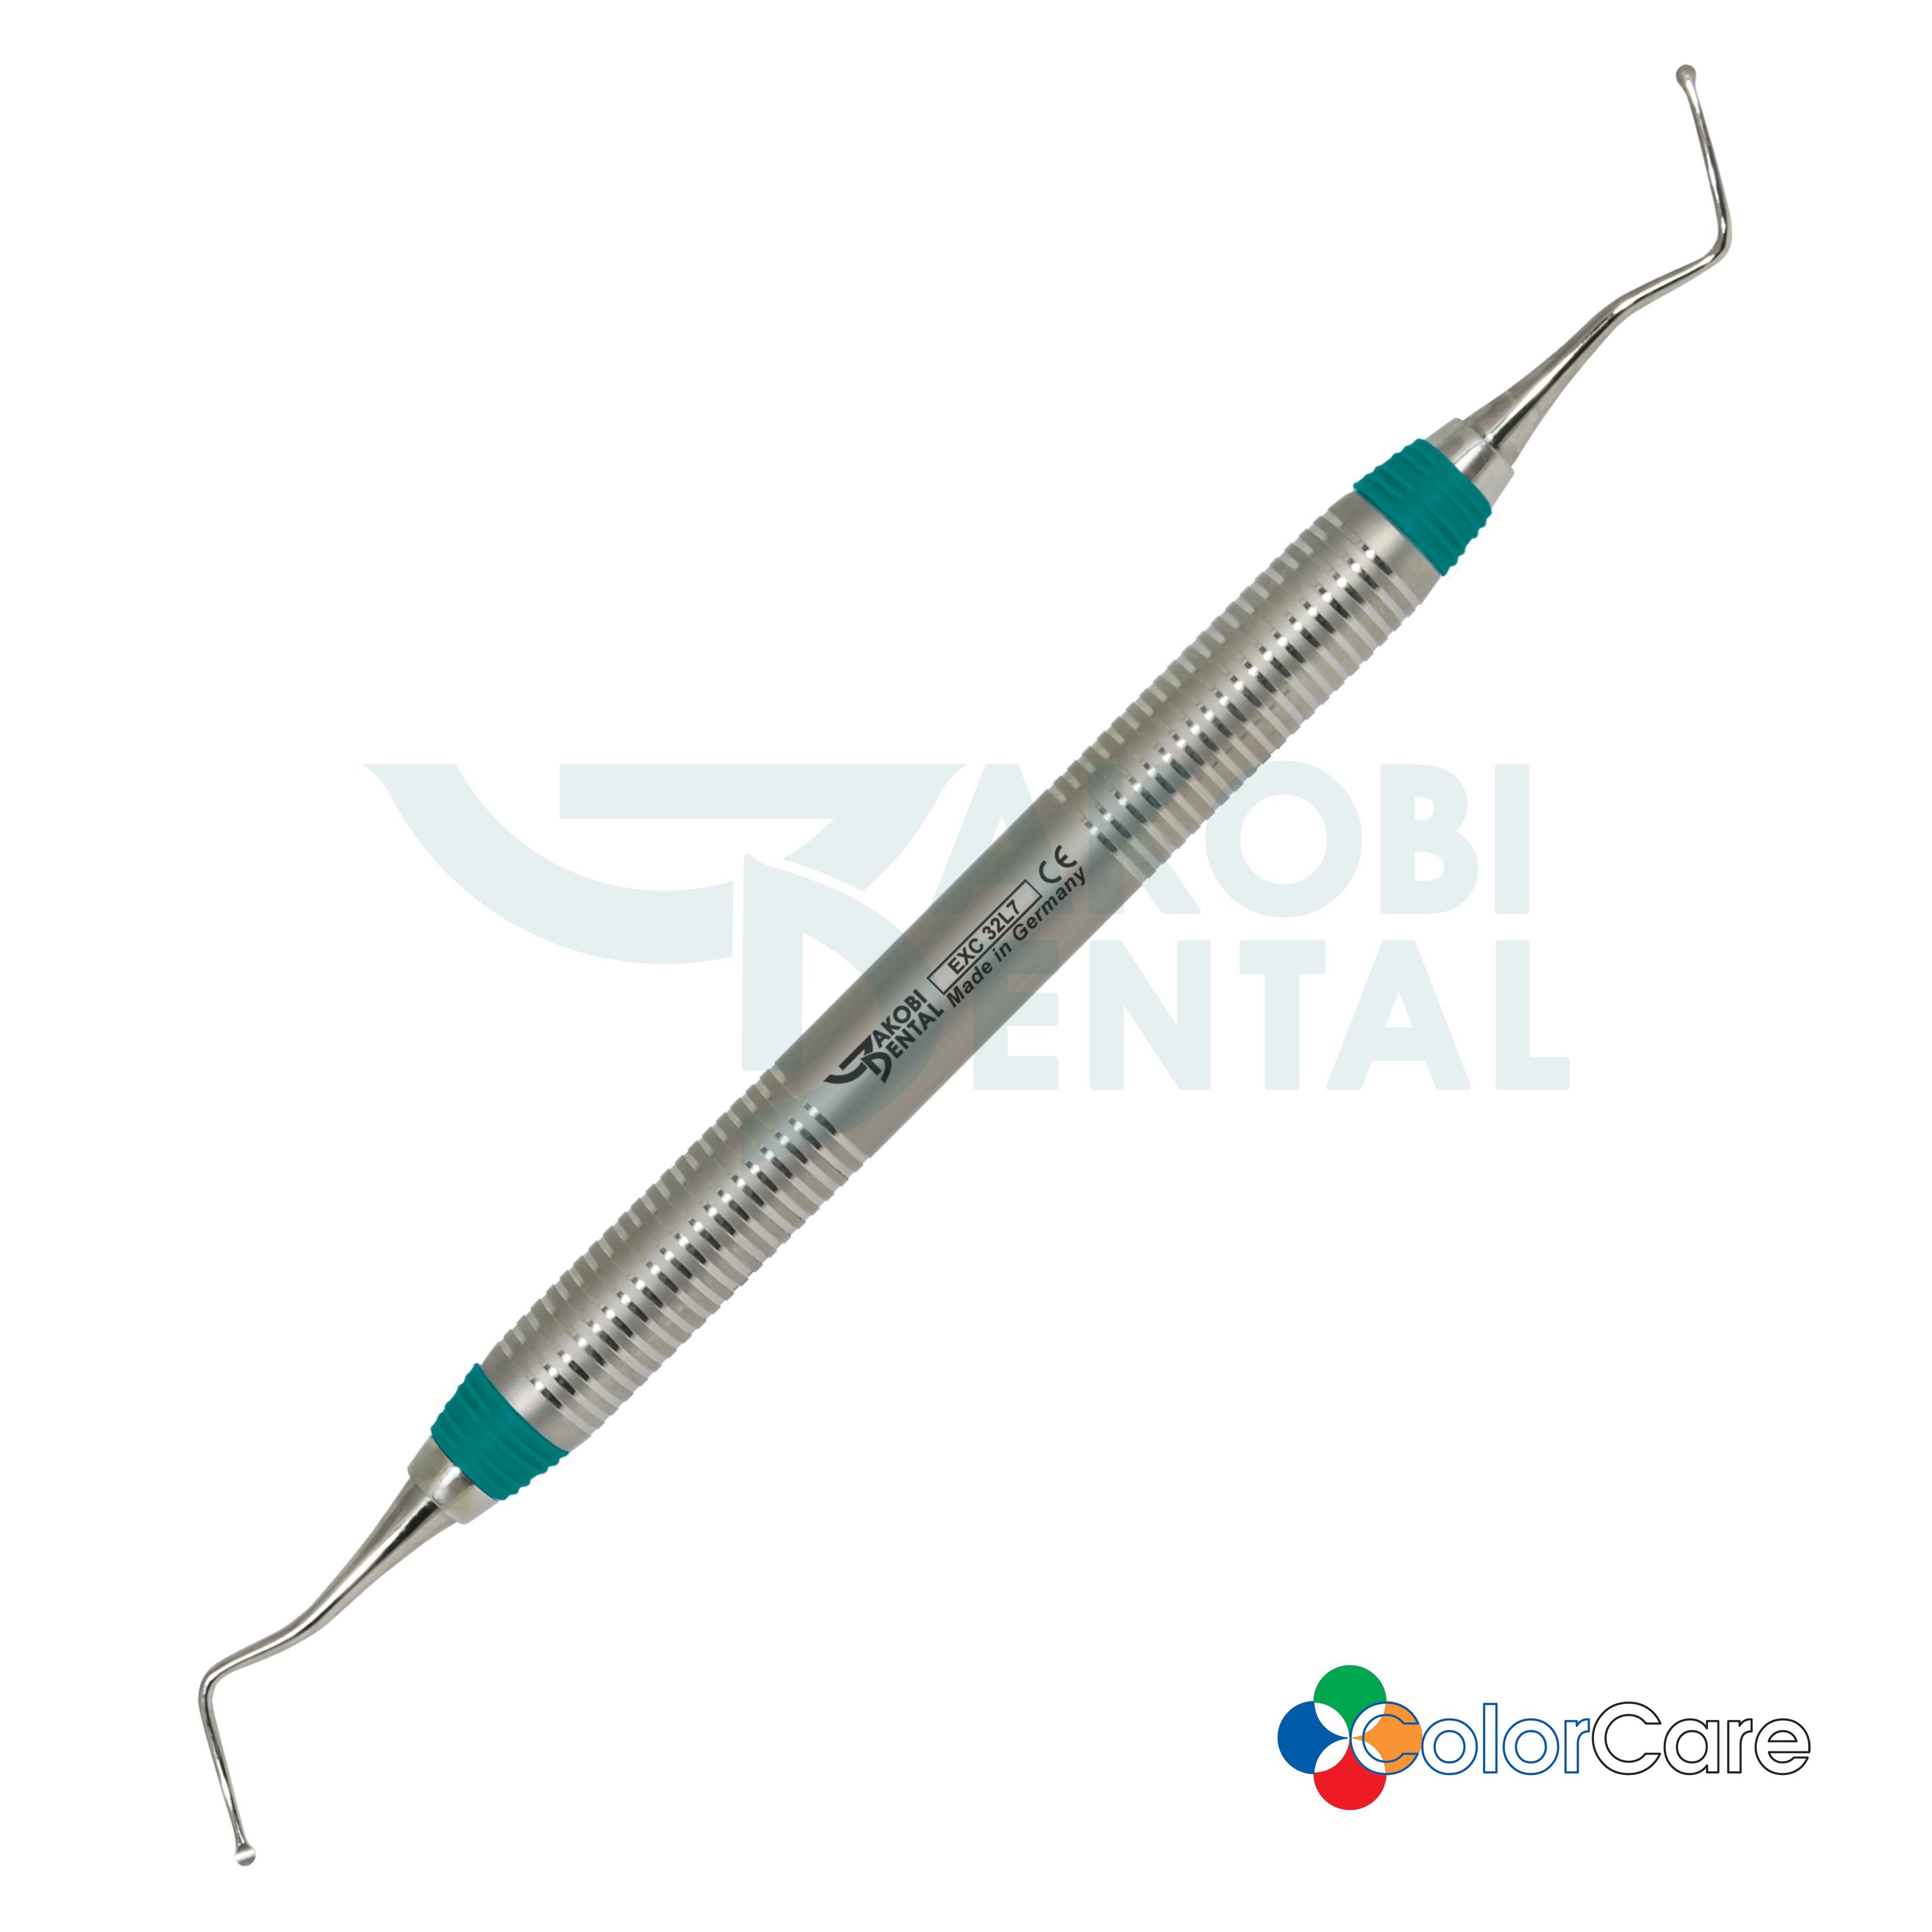 Endodontic Excavator EXC 32L, ColorCare Handle # 7